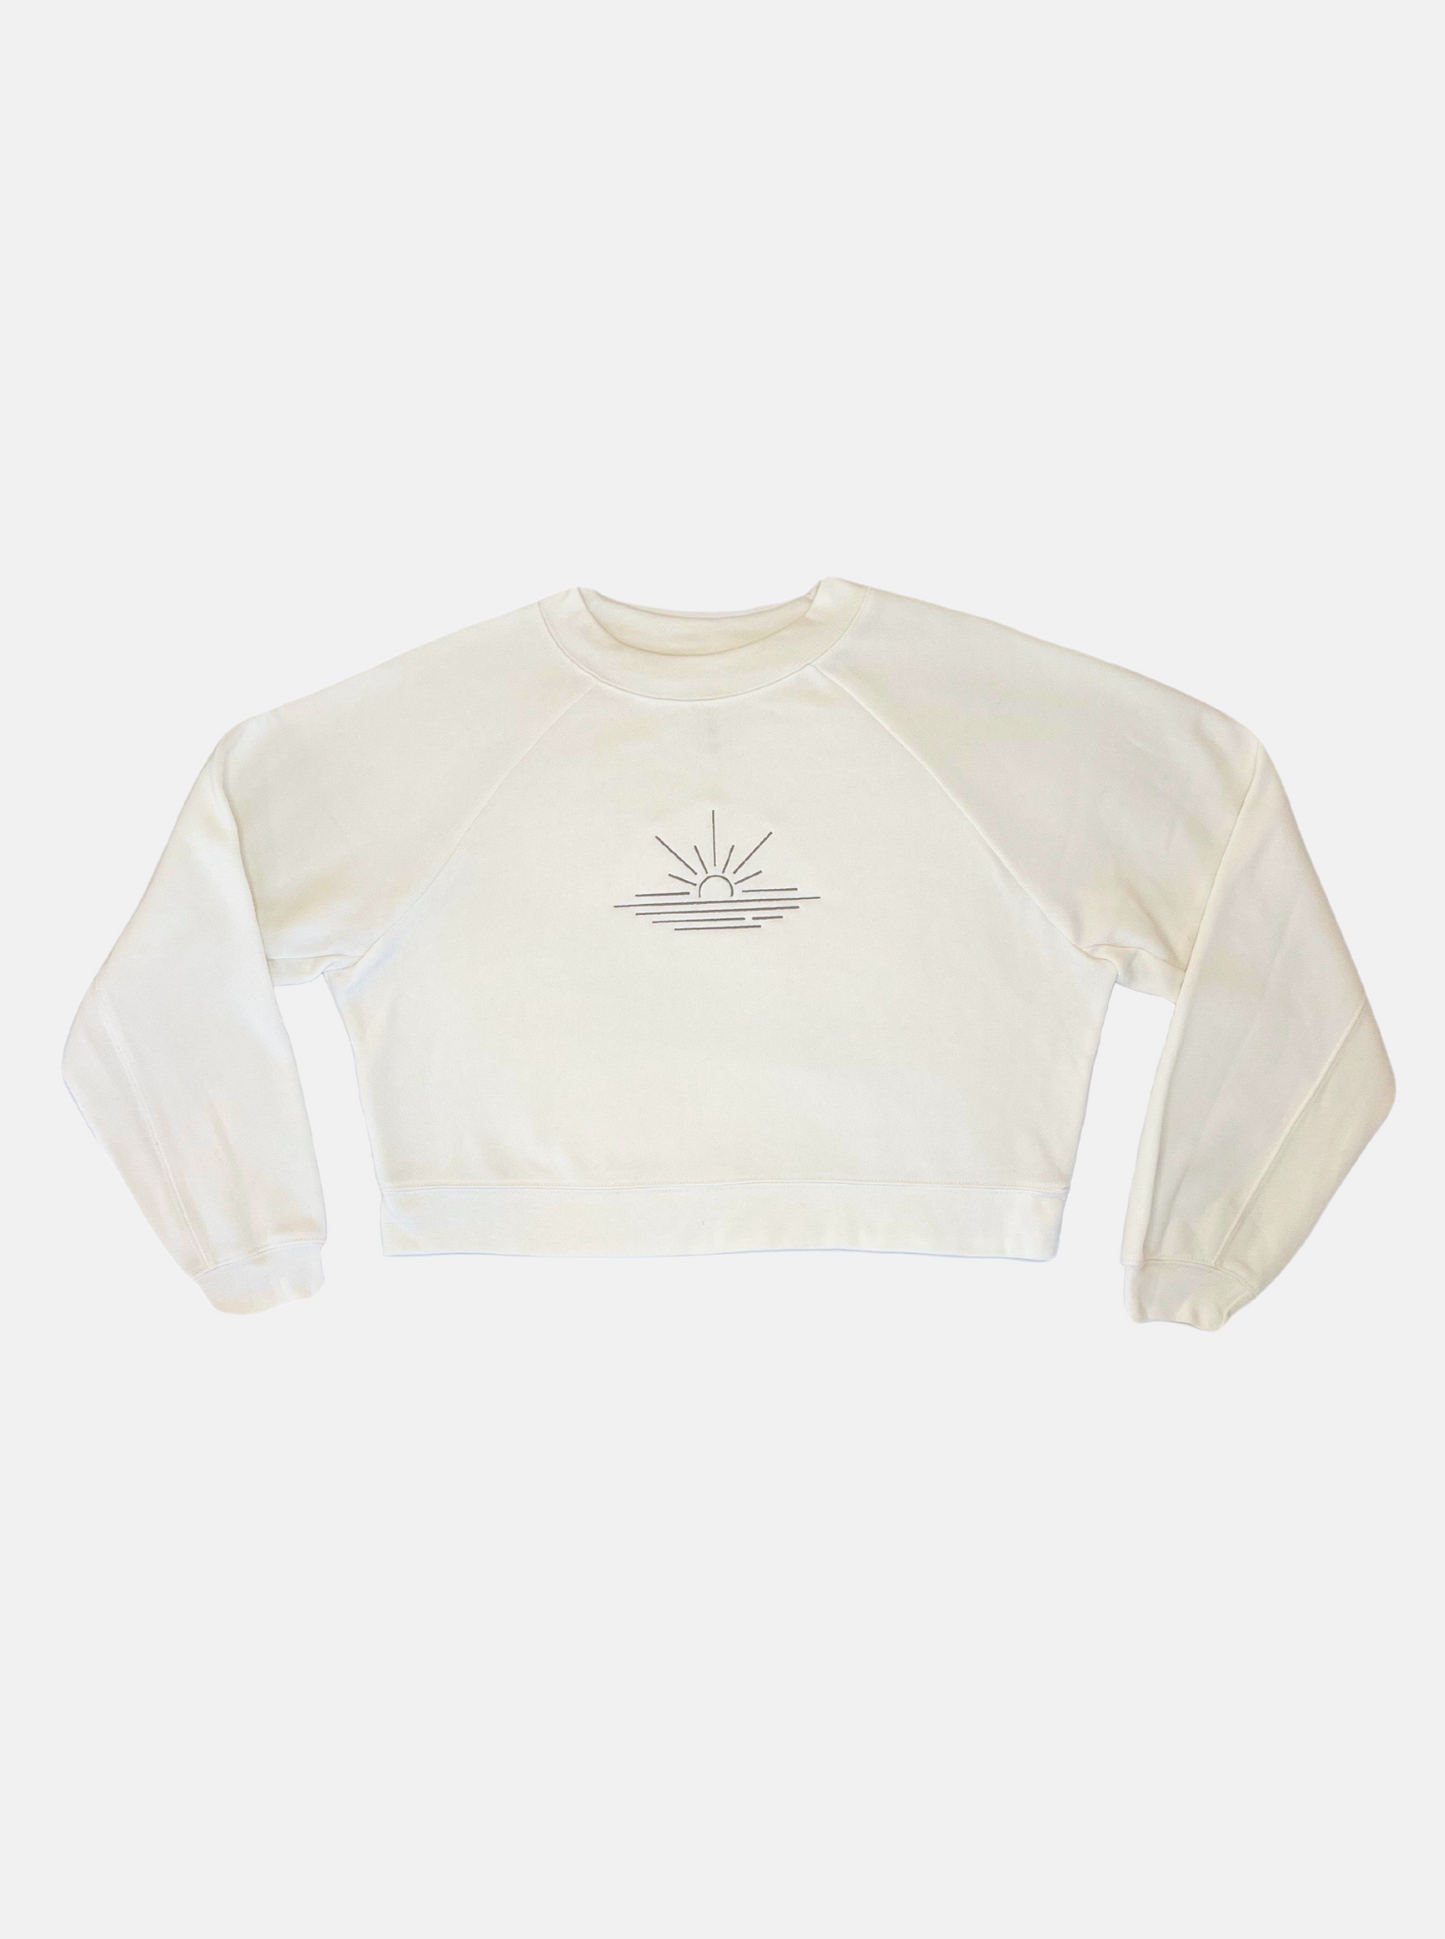 Sun Rays Women’s Crop Sweatshirt, Vintage White